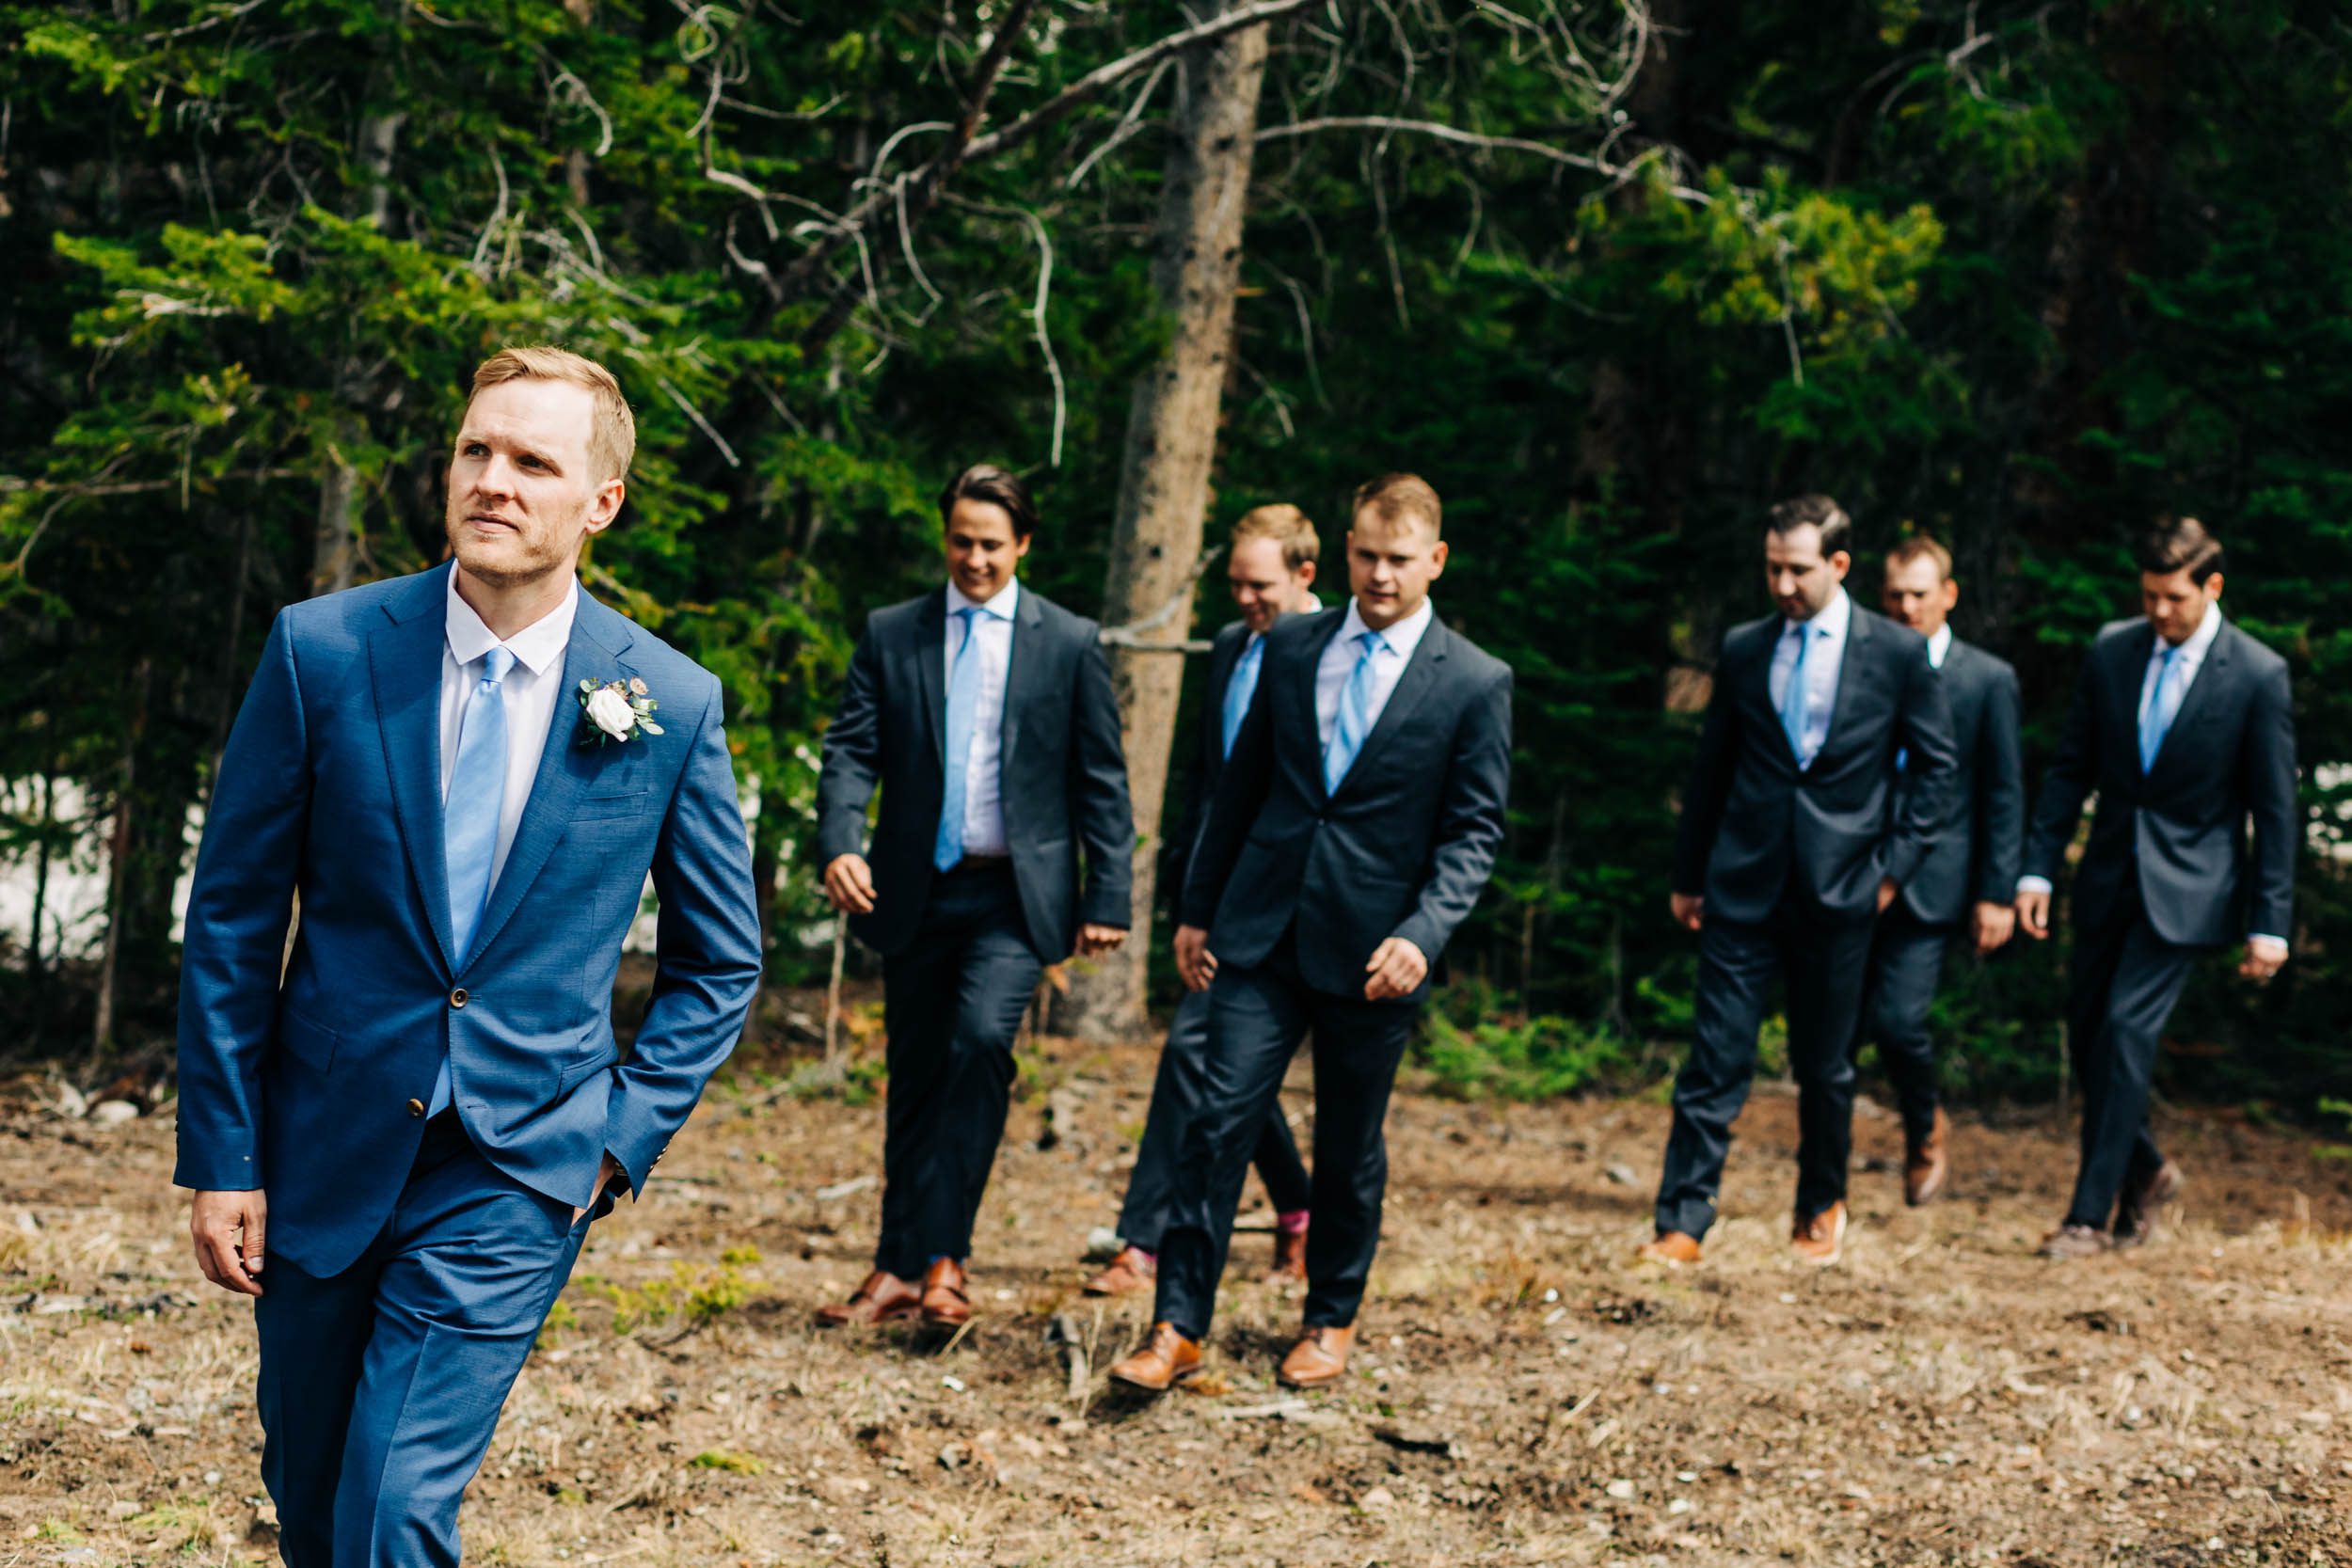 picture of groomsmen at Ten Mile Station wedding in Breckenridge Colorado